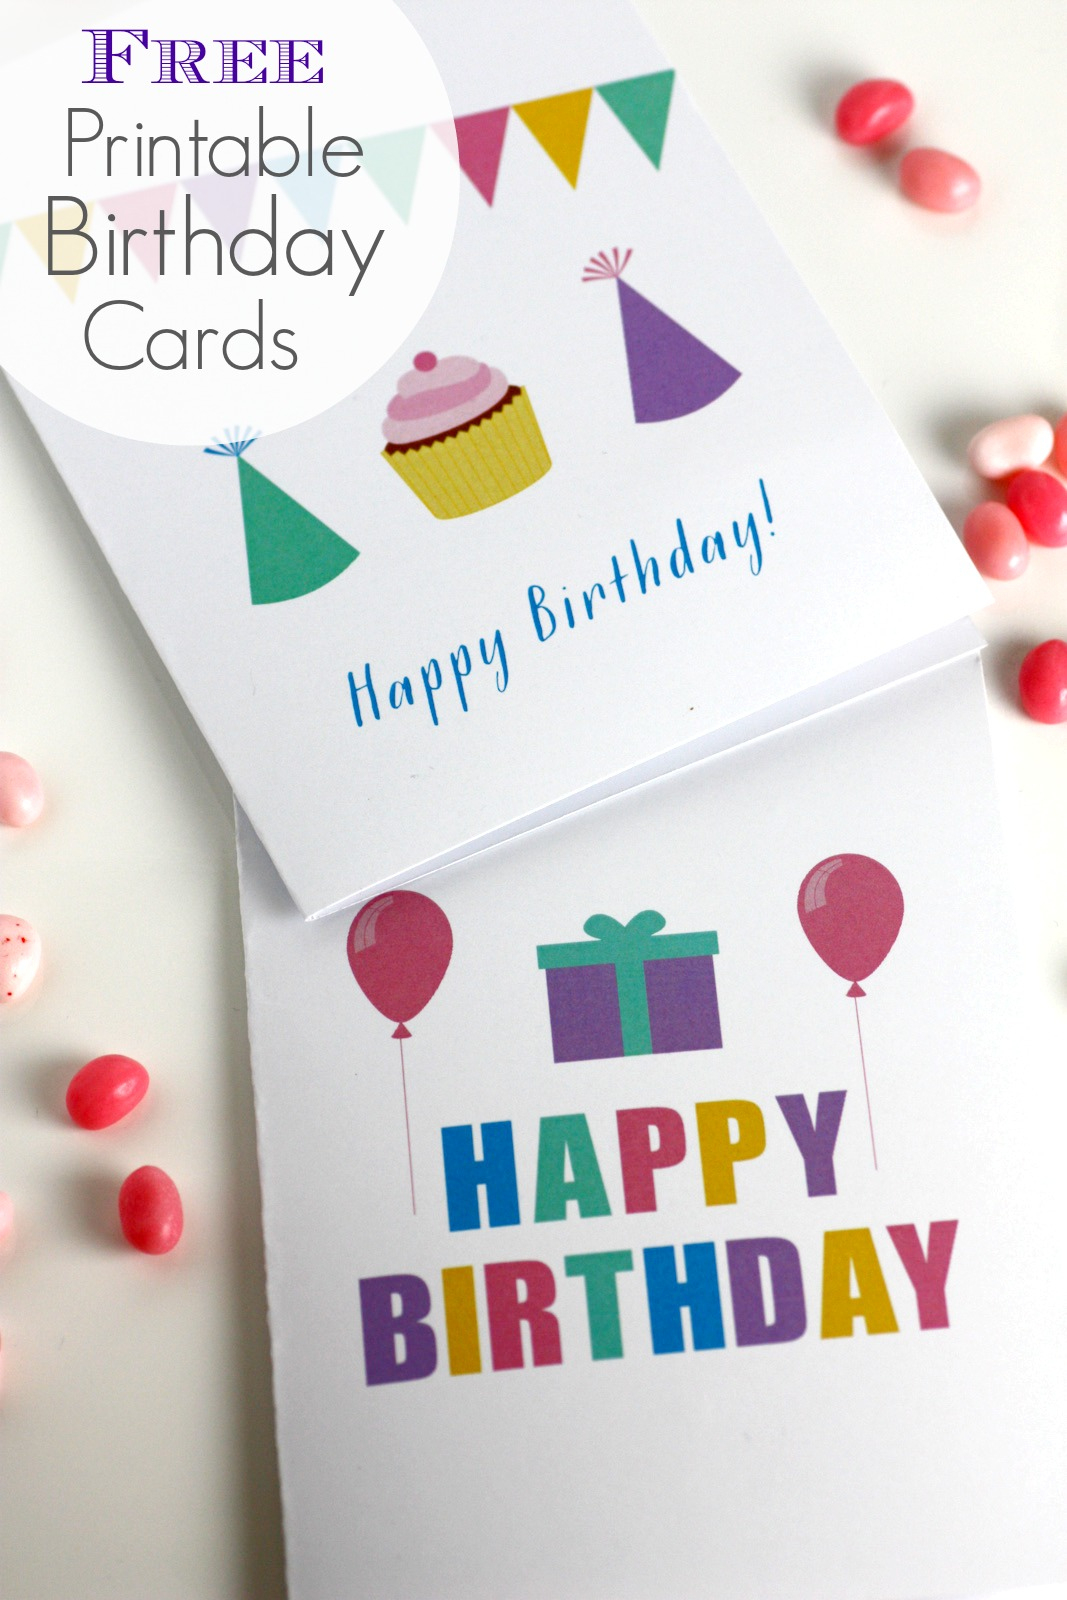 Free Printable Blank Birthday Cards | Catch My Party - Free Printable Birthday Cards